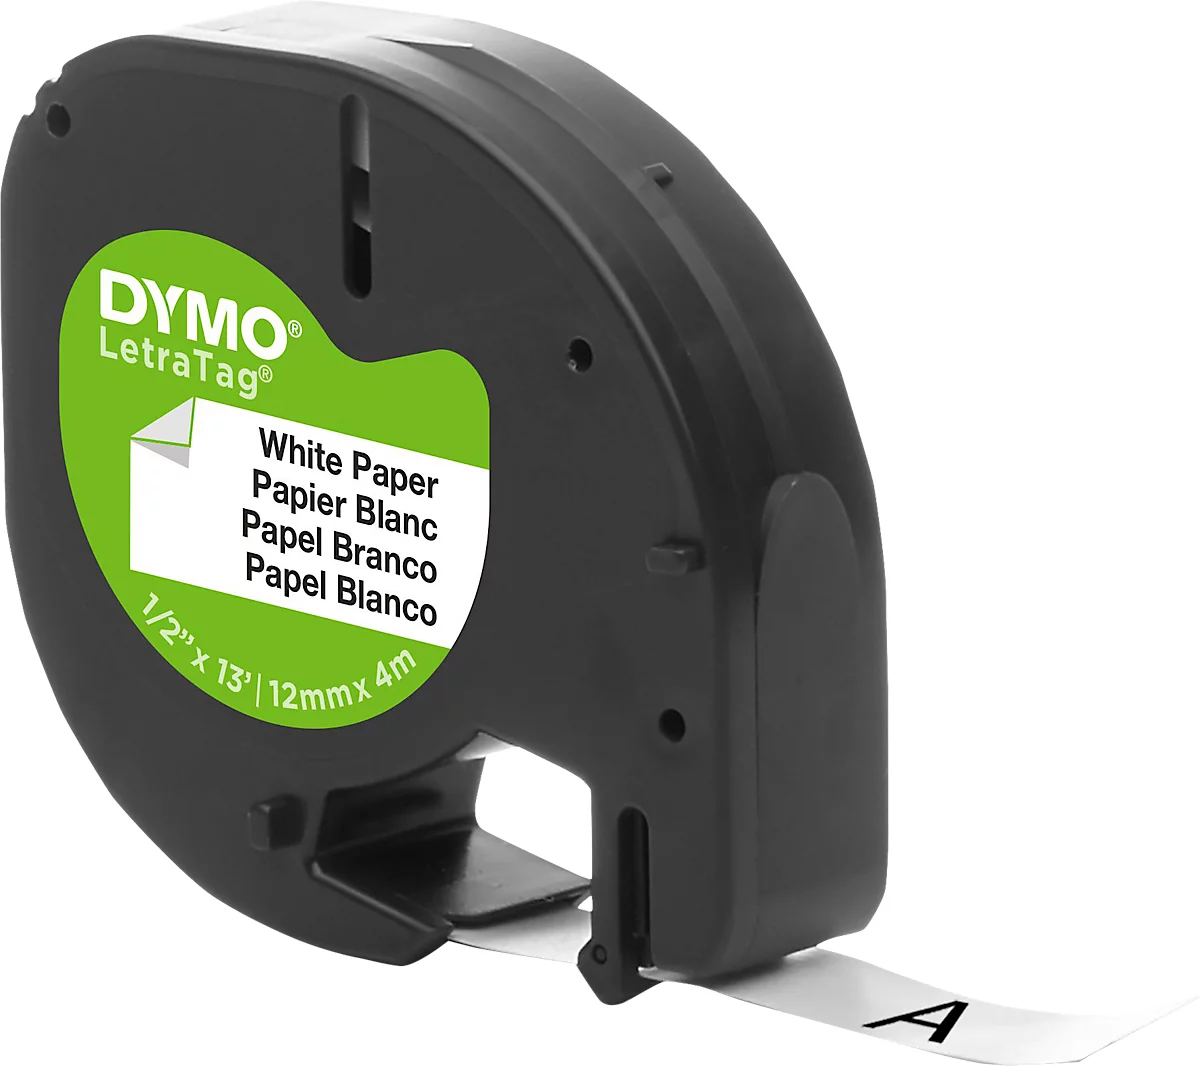 Casete de cinta para DYMO® Letra Tag, papel, 12 mm, blanco